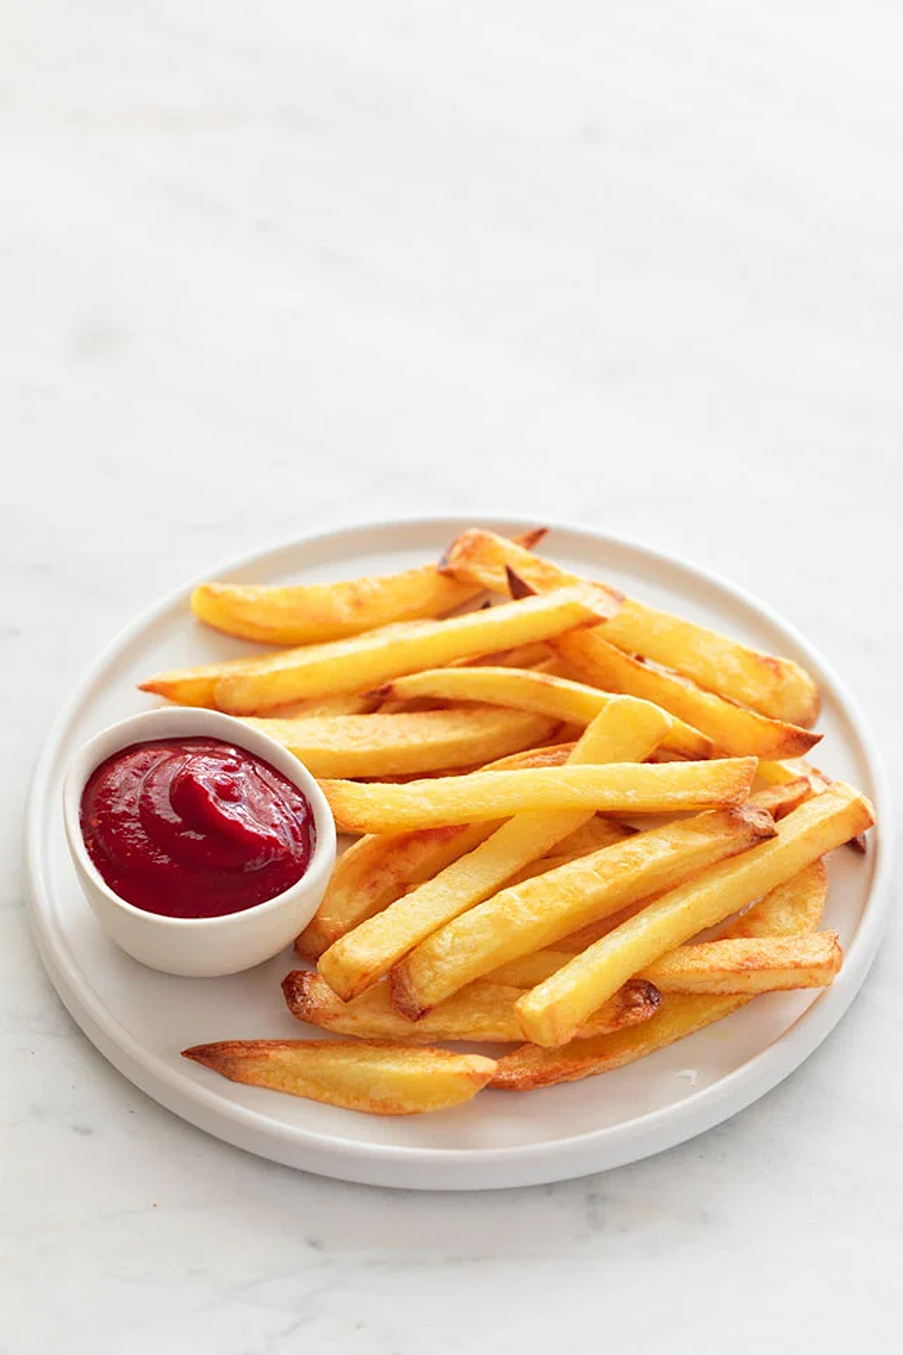 enjoy a plate of ‘proper seaside chips’